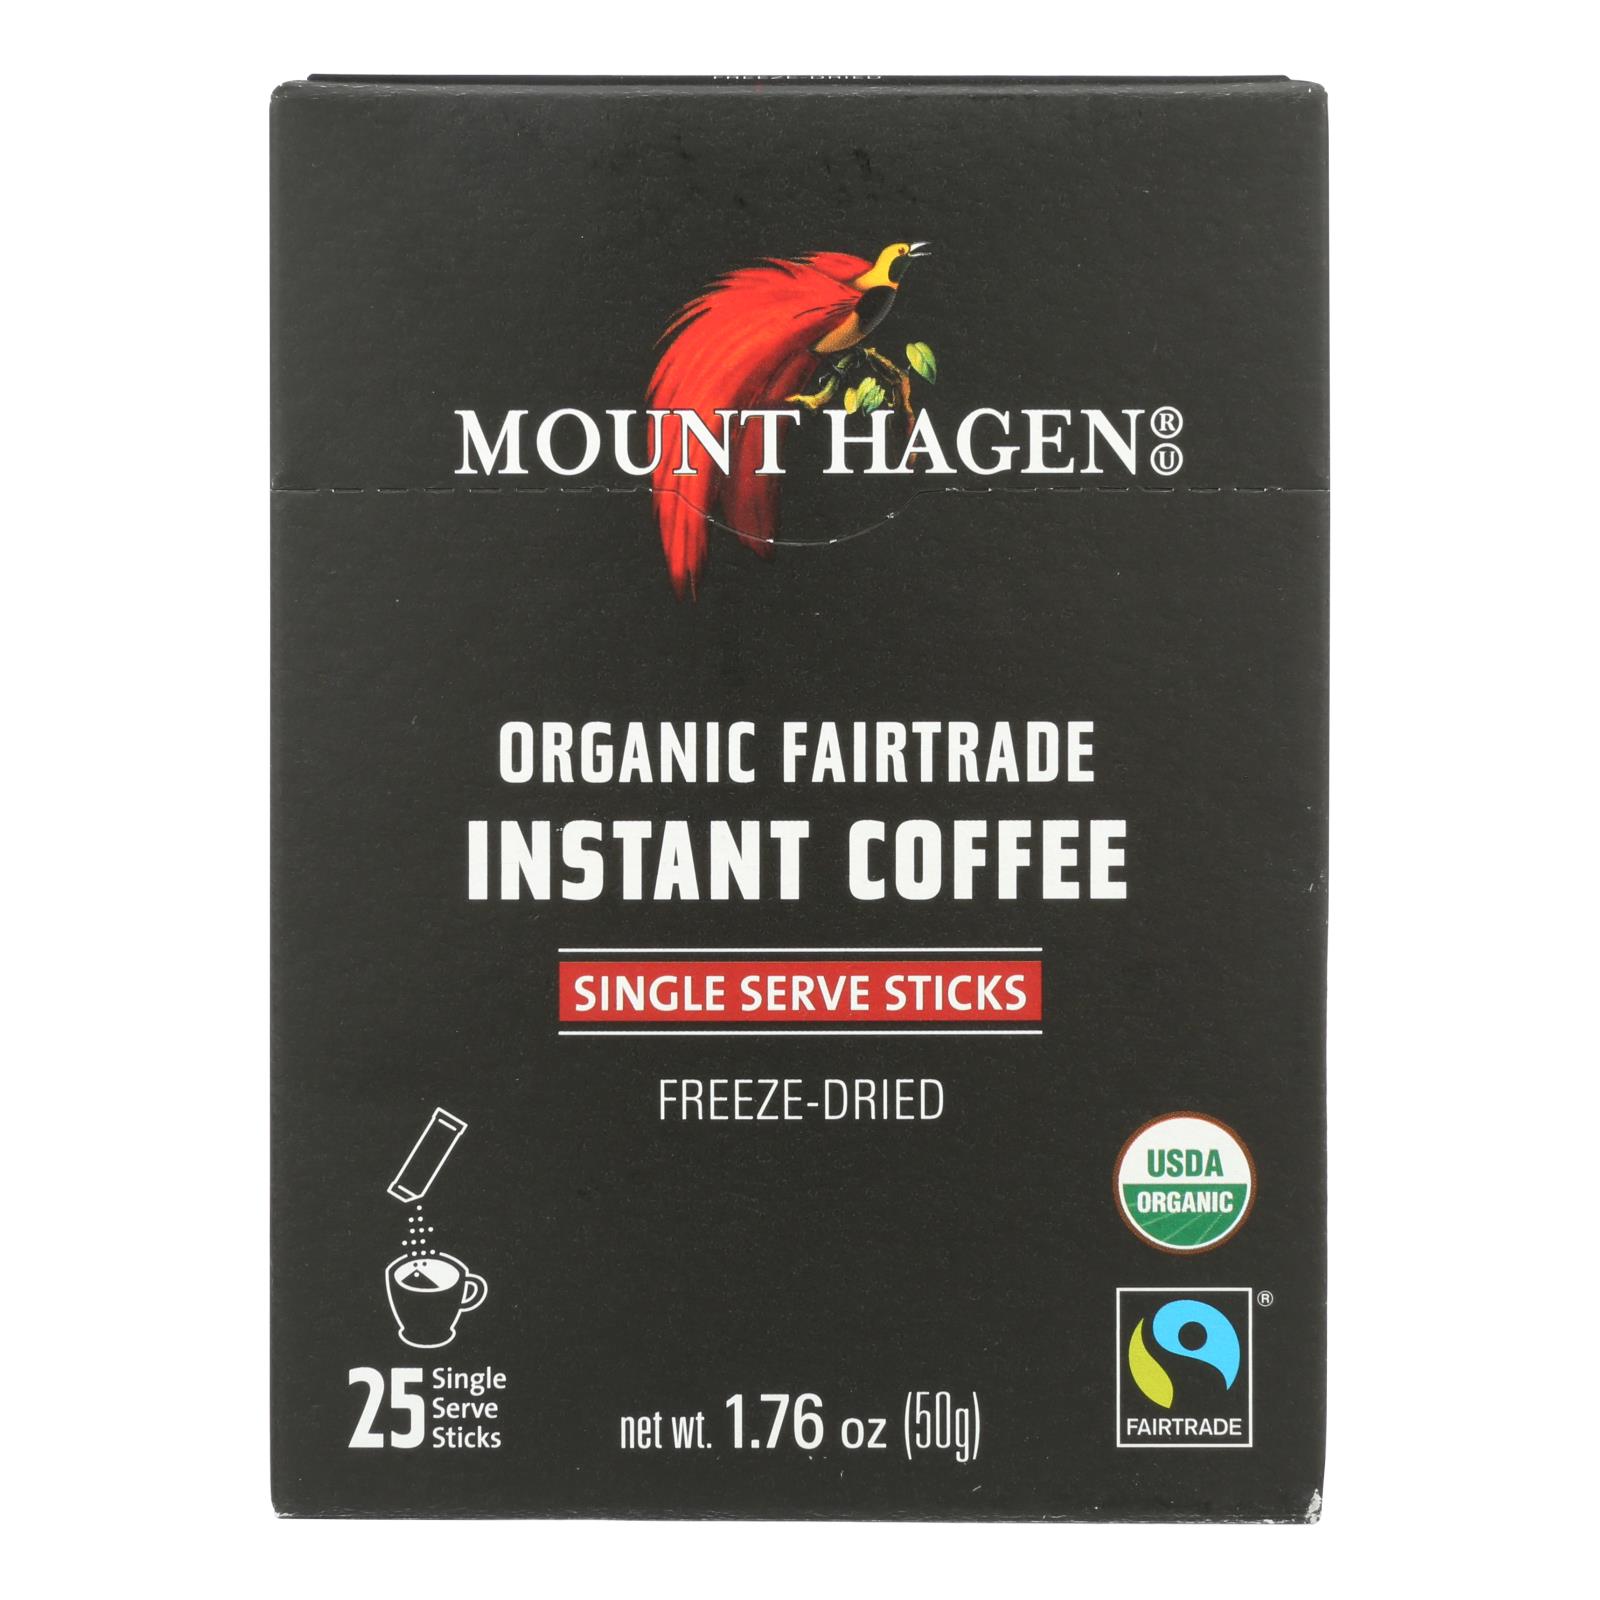 Mount Hagen - Organic Fairtrade Instant Coffee 25 Single Serve Sticks 25ct - 8개 묶음상품 - 1.76 OZ